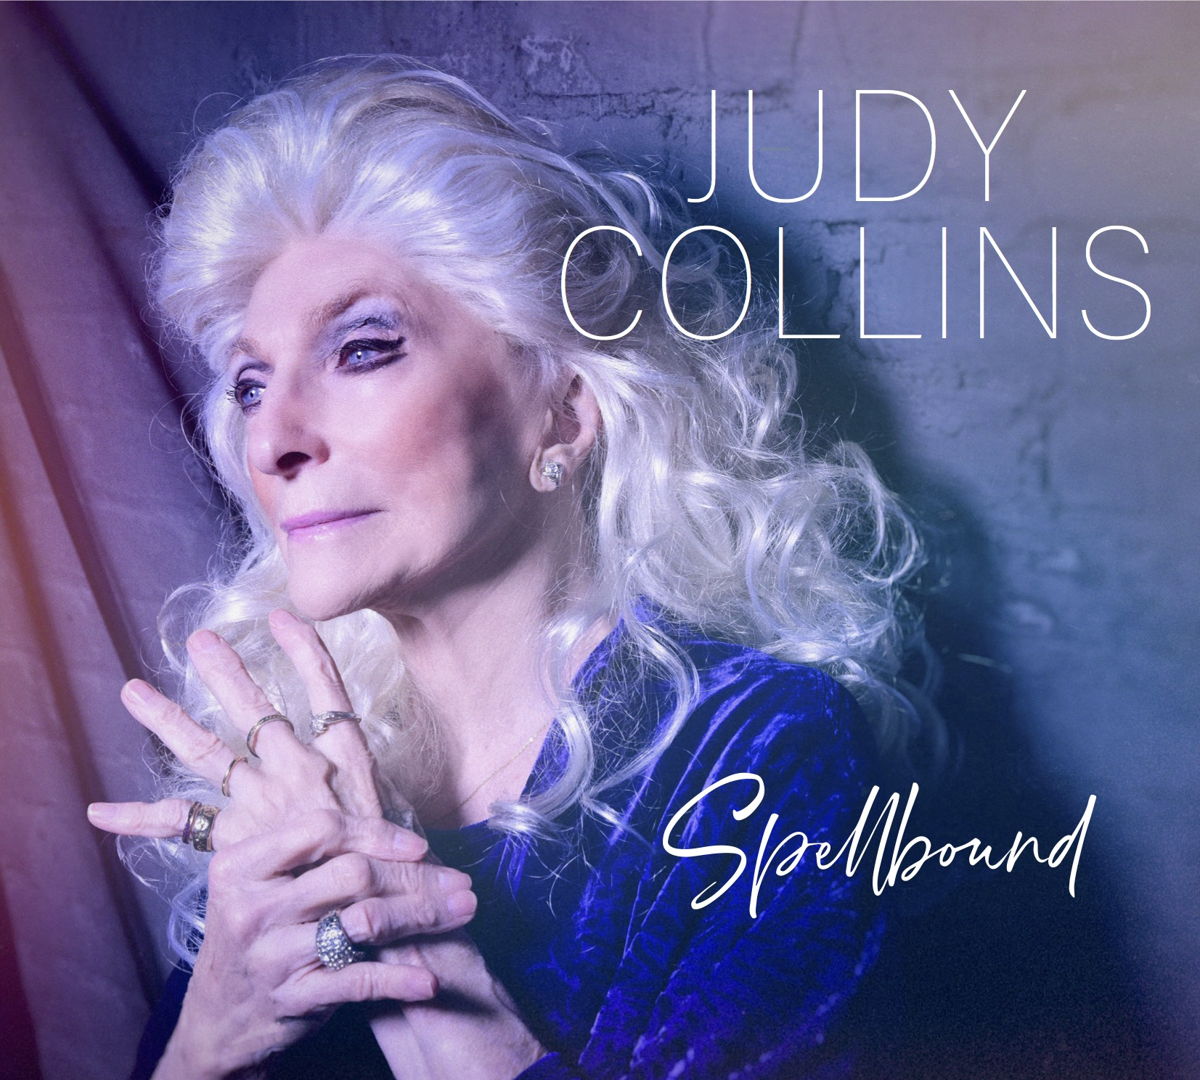 JUDY COLLINS Spellbound - album cover artwork